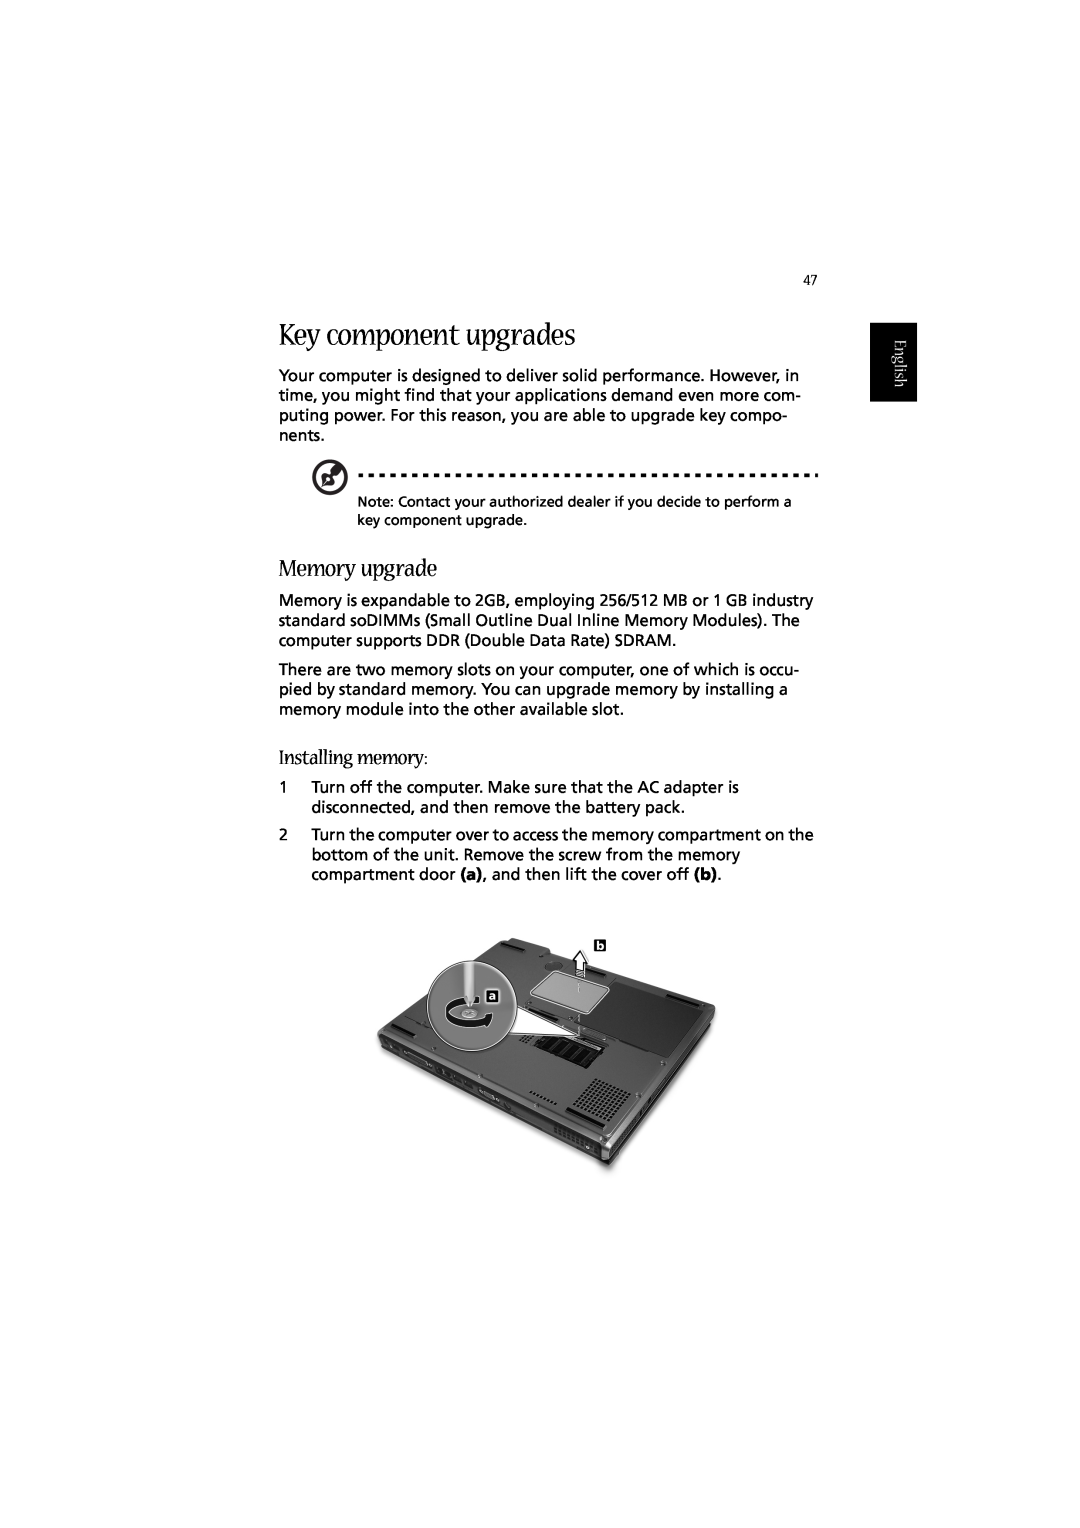 Acer 2010 manual Key component upgrades, Memory upgrade, Installing memory, English 